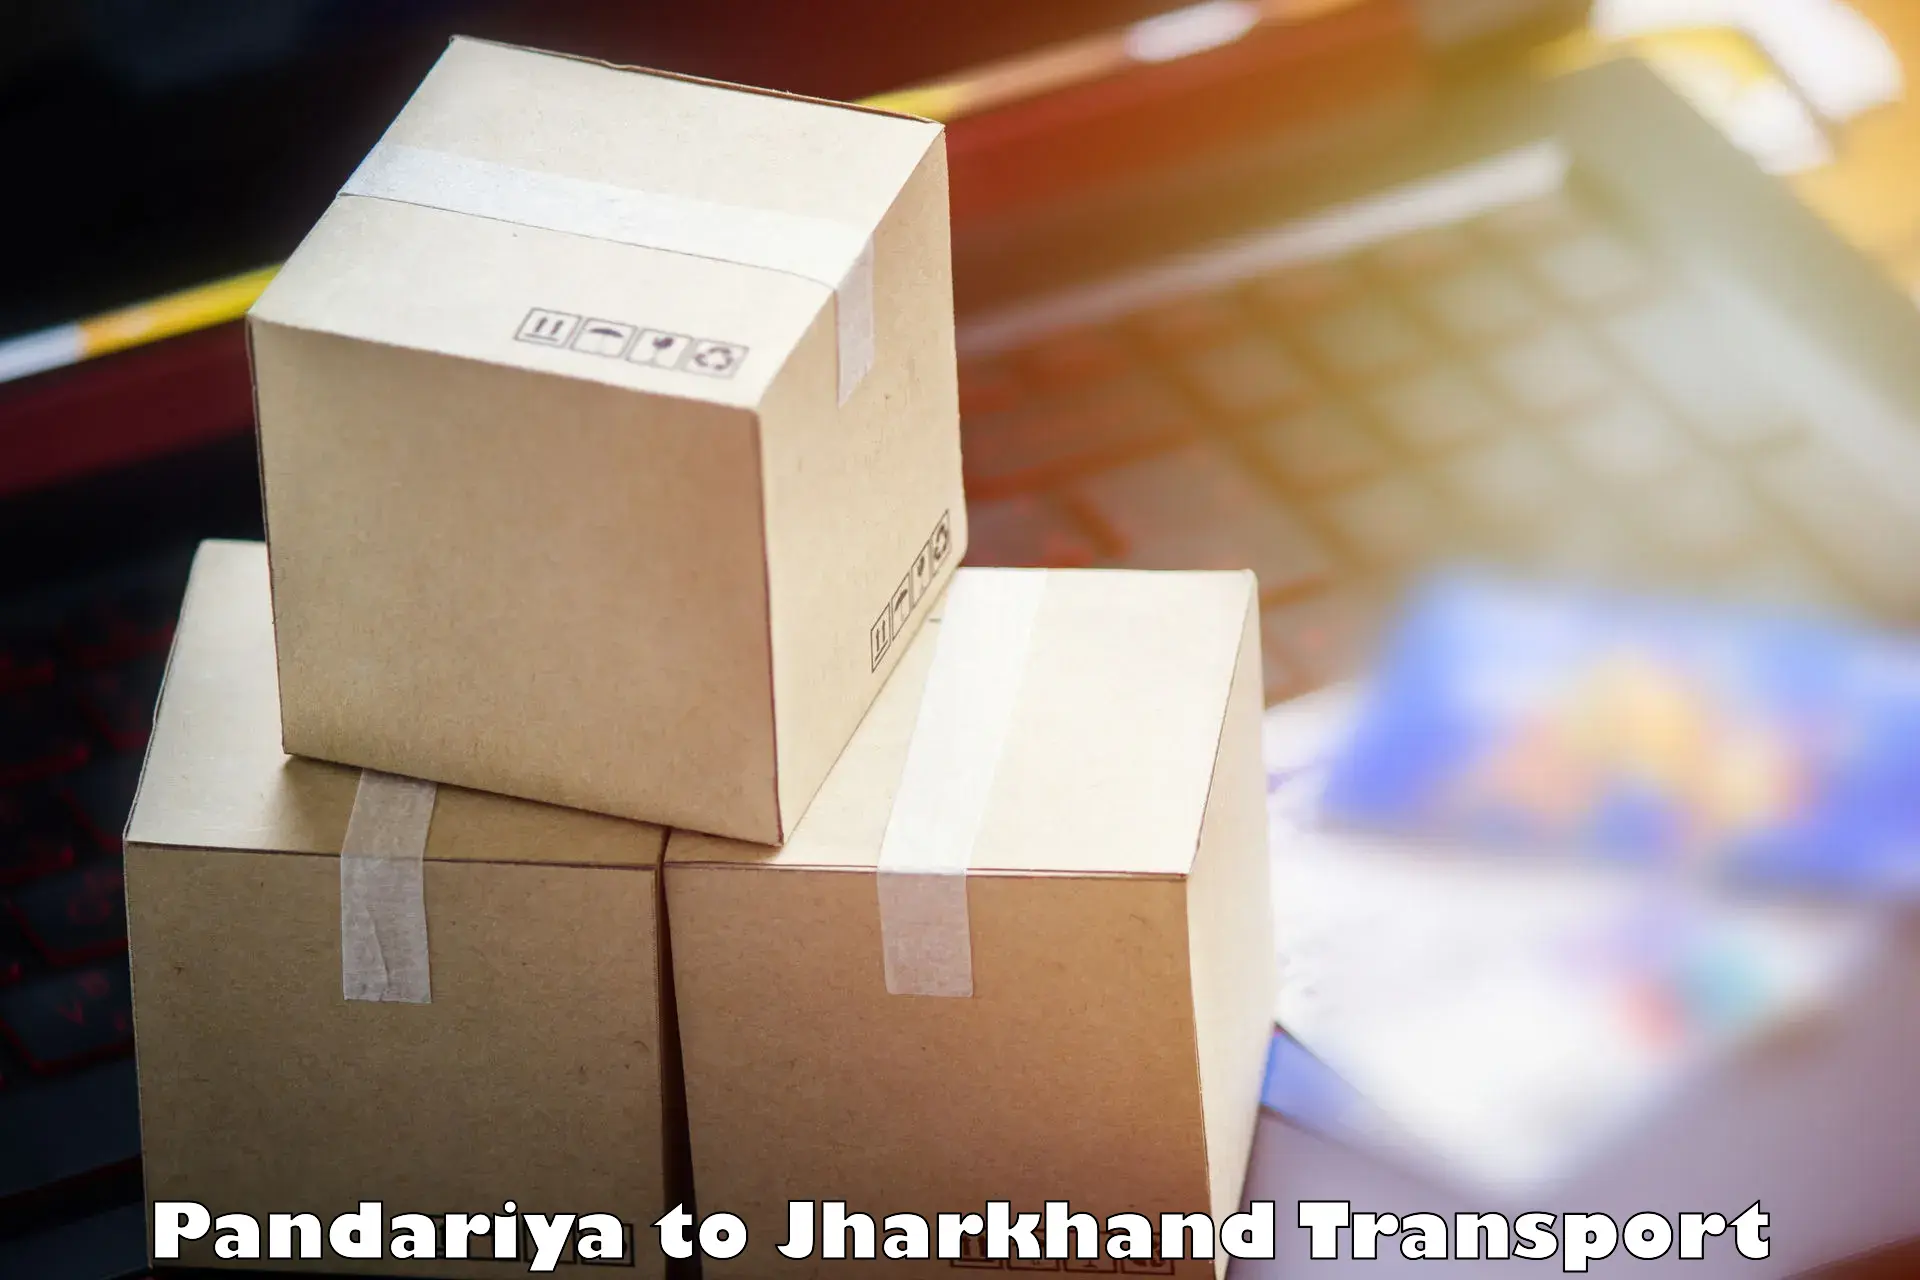 Truck transport companies in India Pandariya to Tandwa